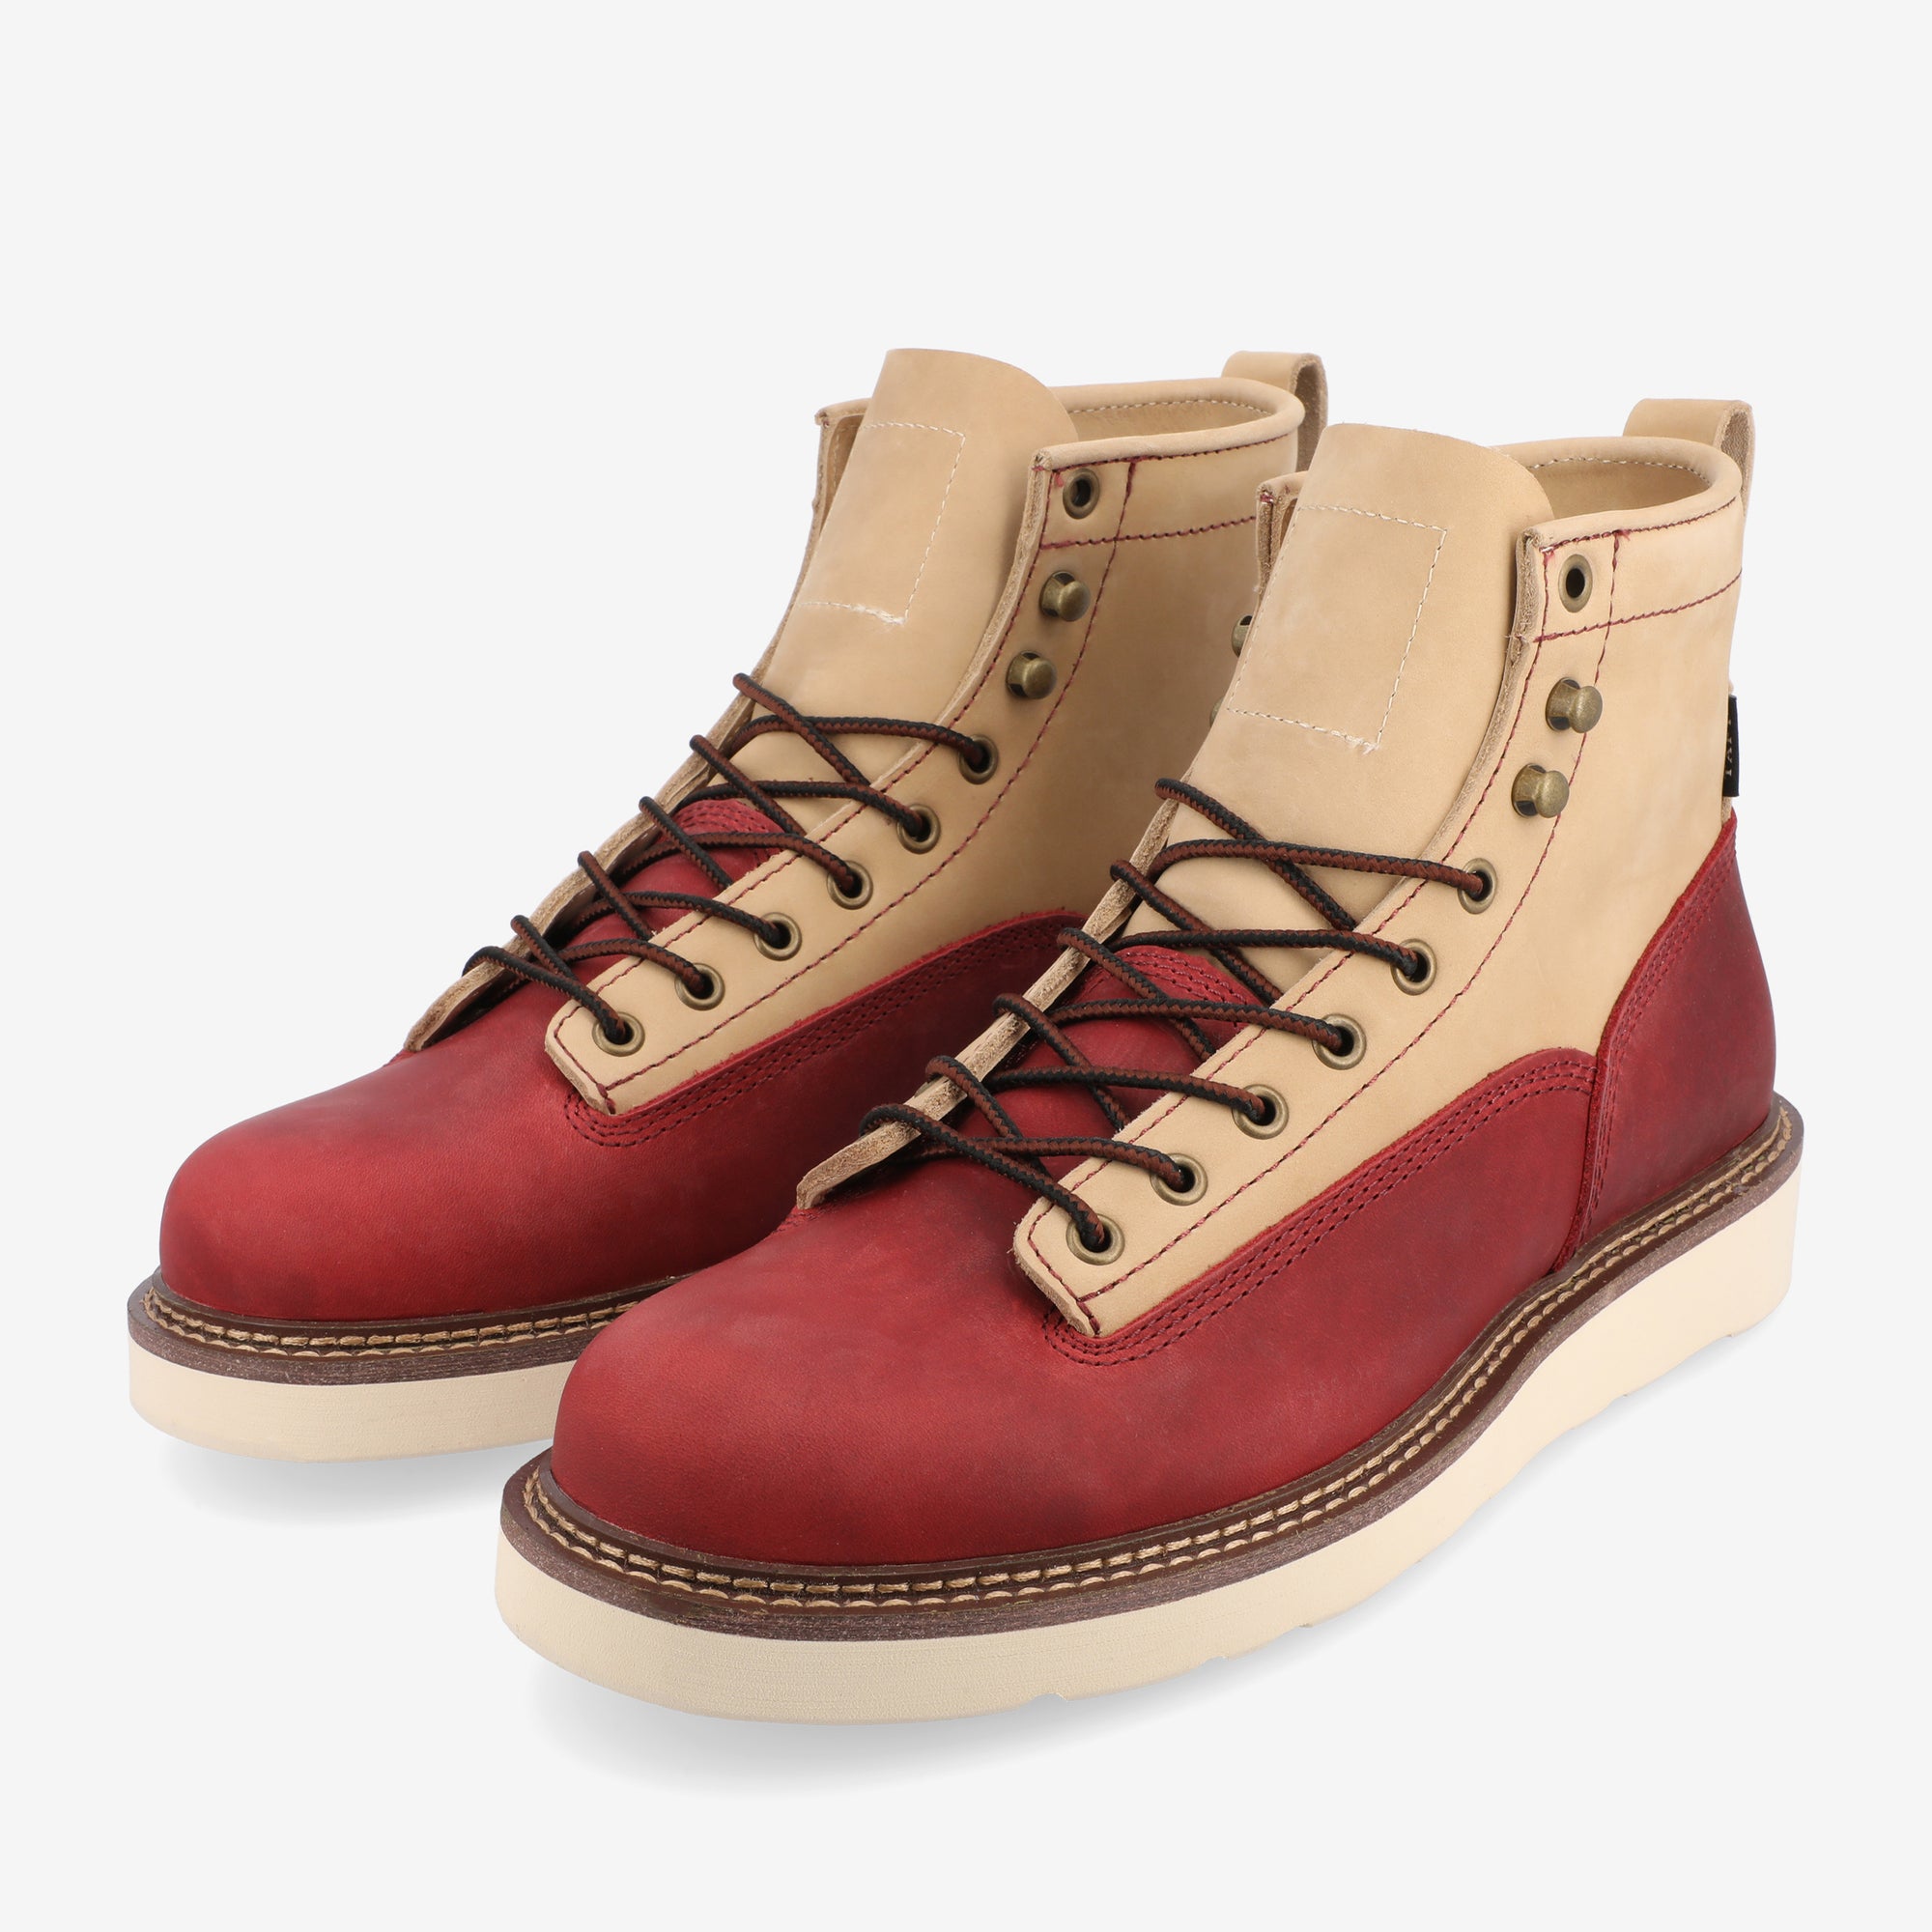 Model 001 Boot in Cherry/Cream